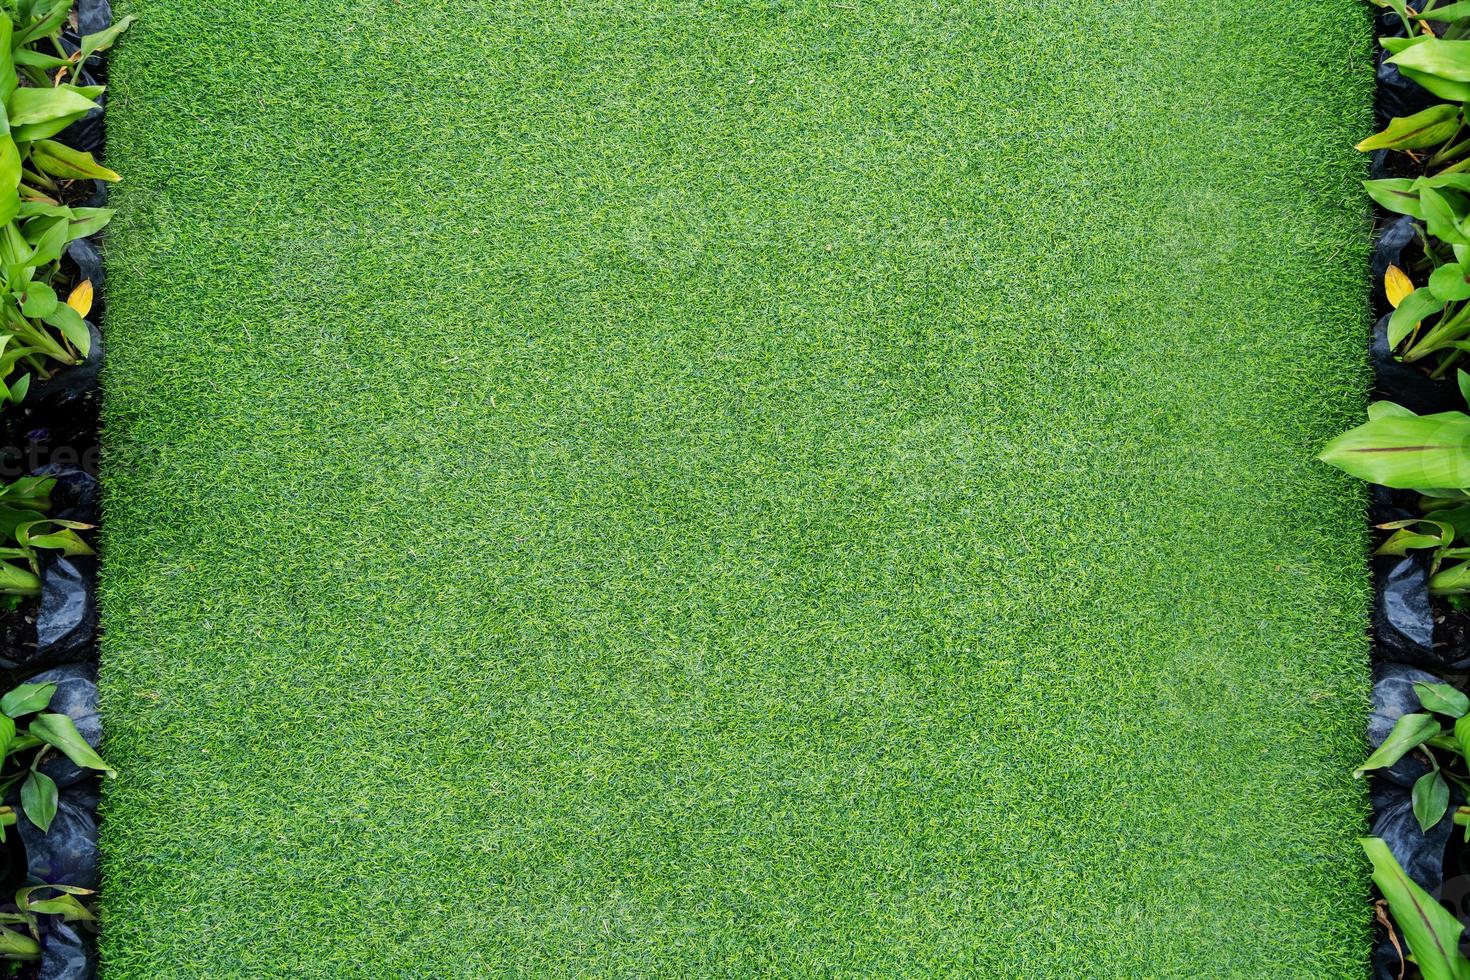 foto de la vista superior, fondo de textura de césped verde artificial